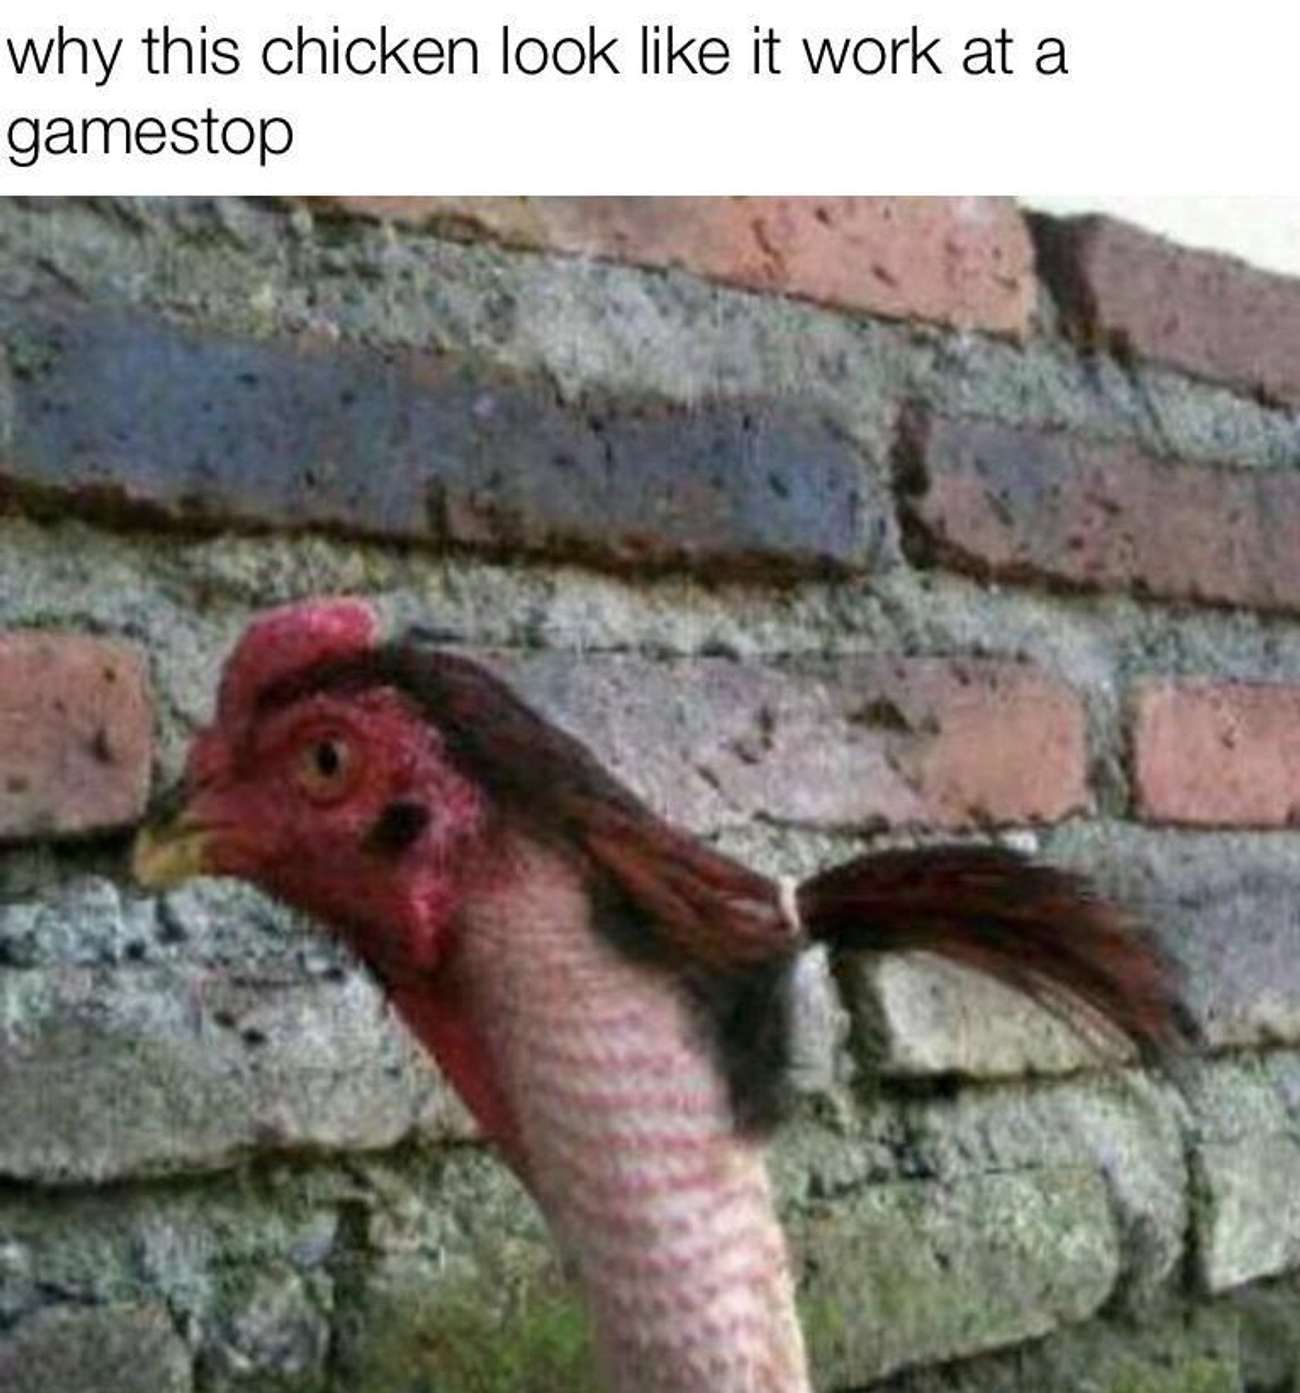 gamestop worker meme - why this chicken look it work at a gamestop